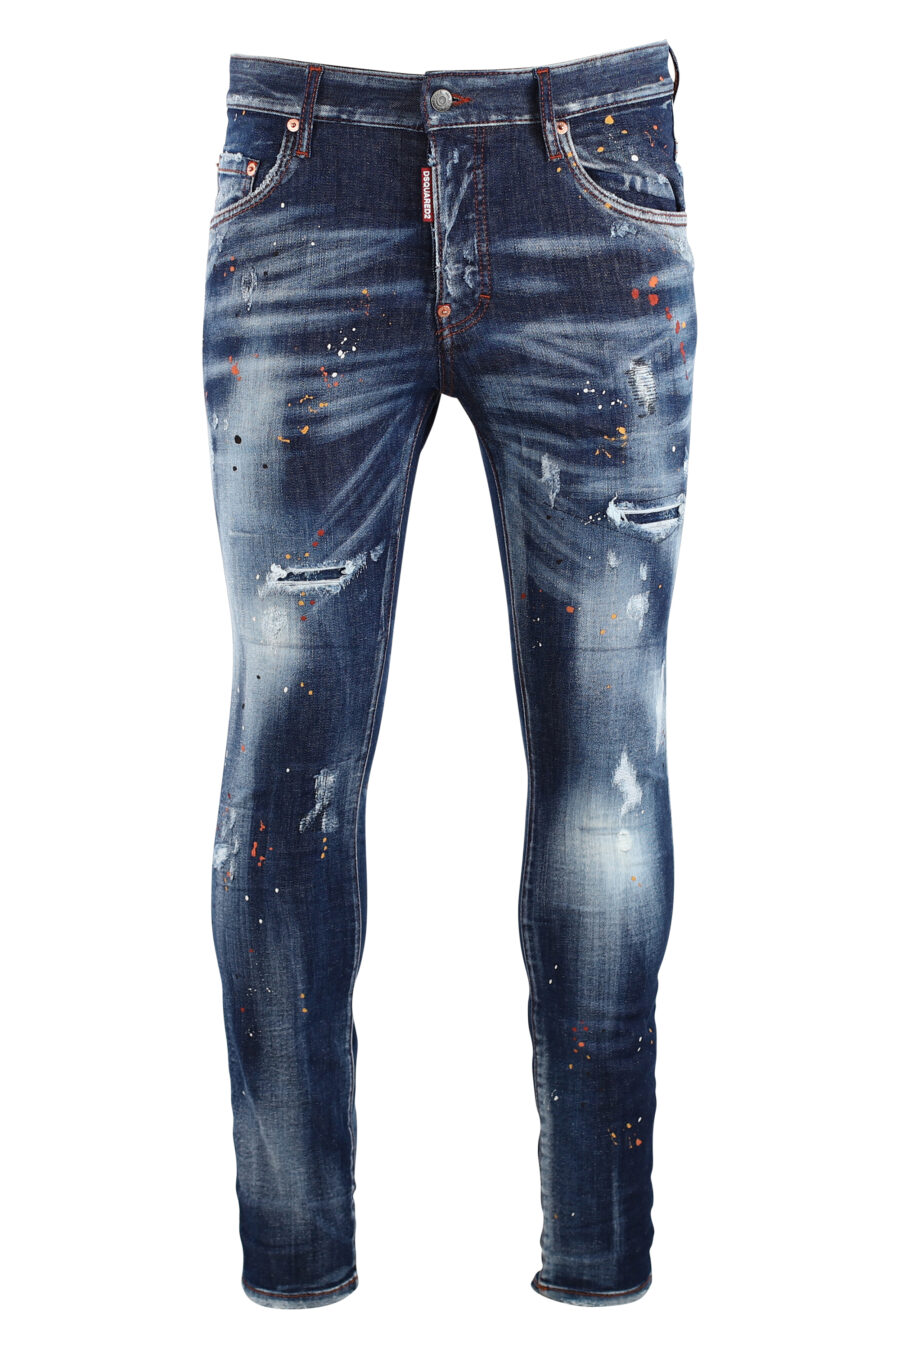 Super twinkie" blue frayed jeans - IMG 7536